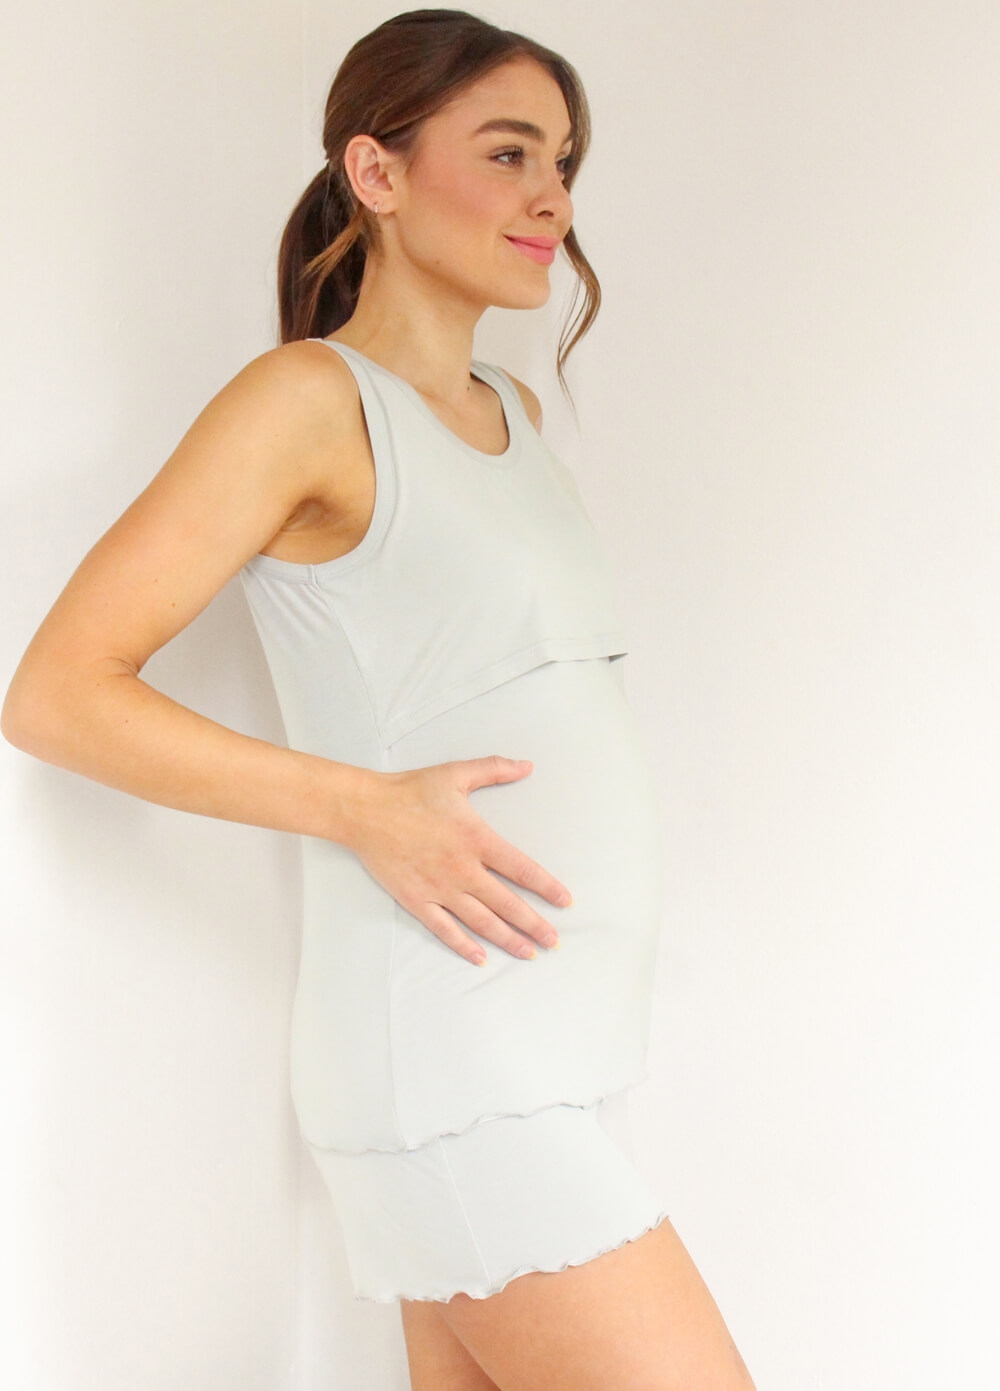 Lait & Co - Adel Twilight Maternity Nursing Sleep Short Set -Grey